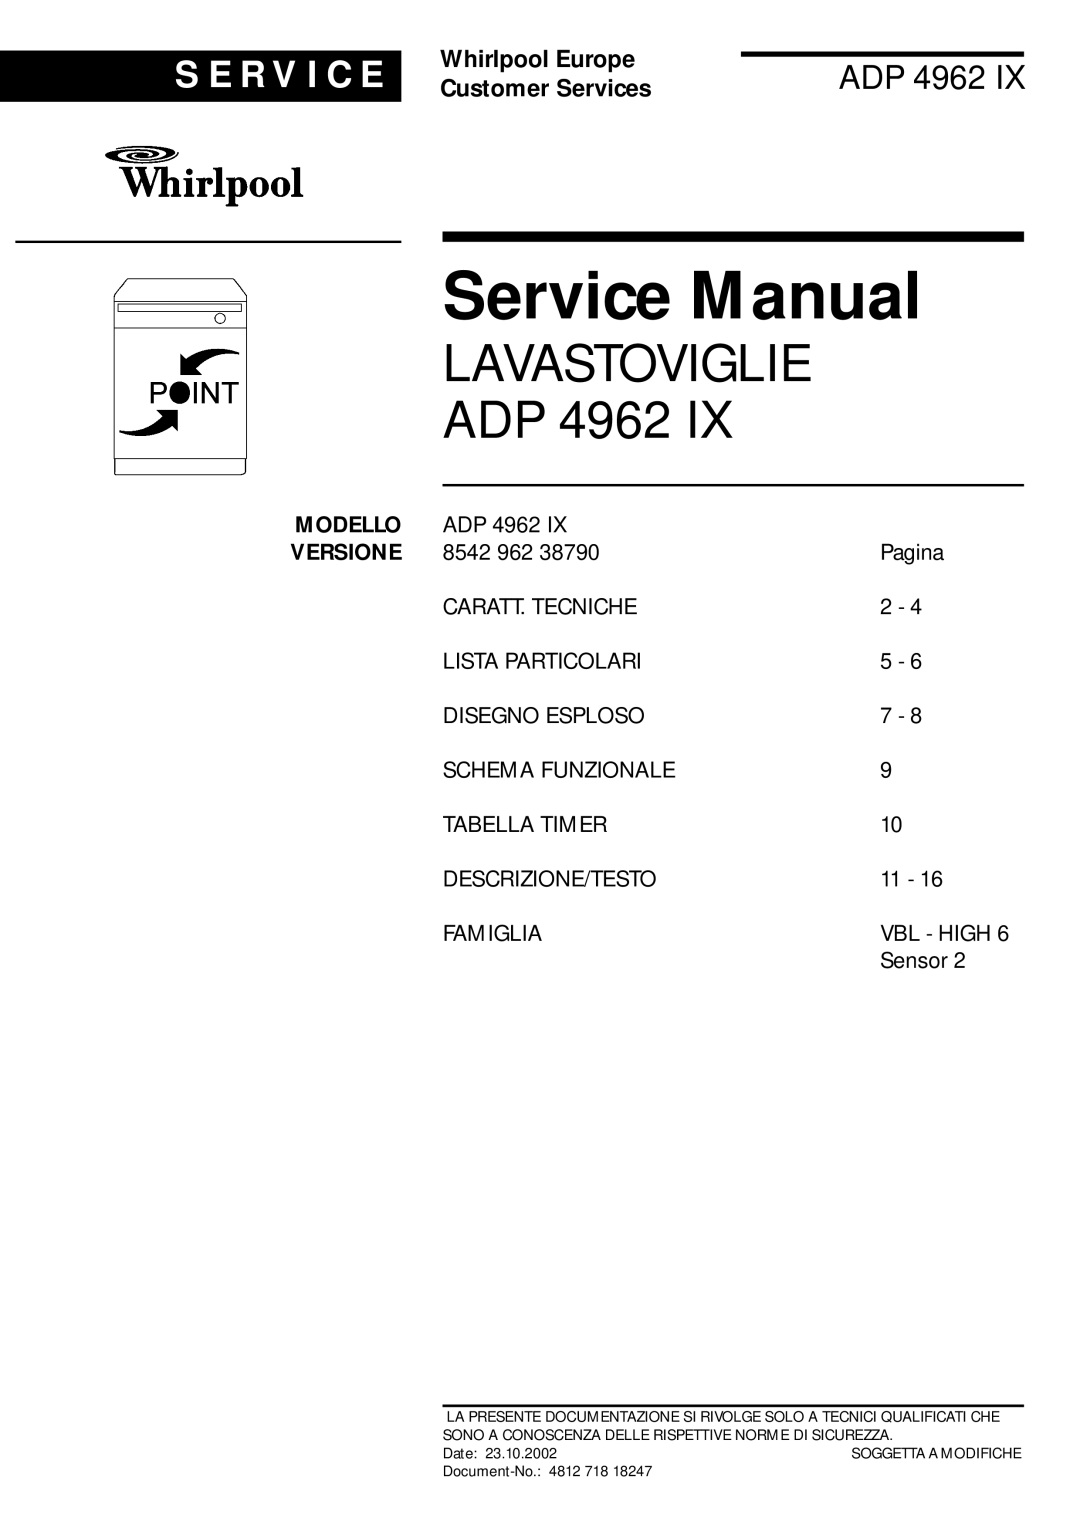 Whirlpool 4962, IX service manual Modello, Lavastoviglie Adp, S E R V I C E, Whirlpool Europe, Customer Services 